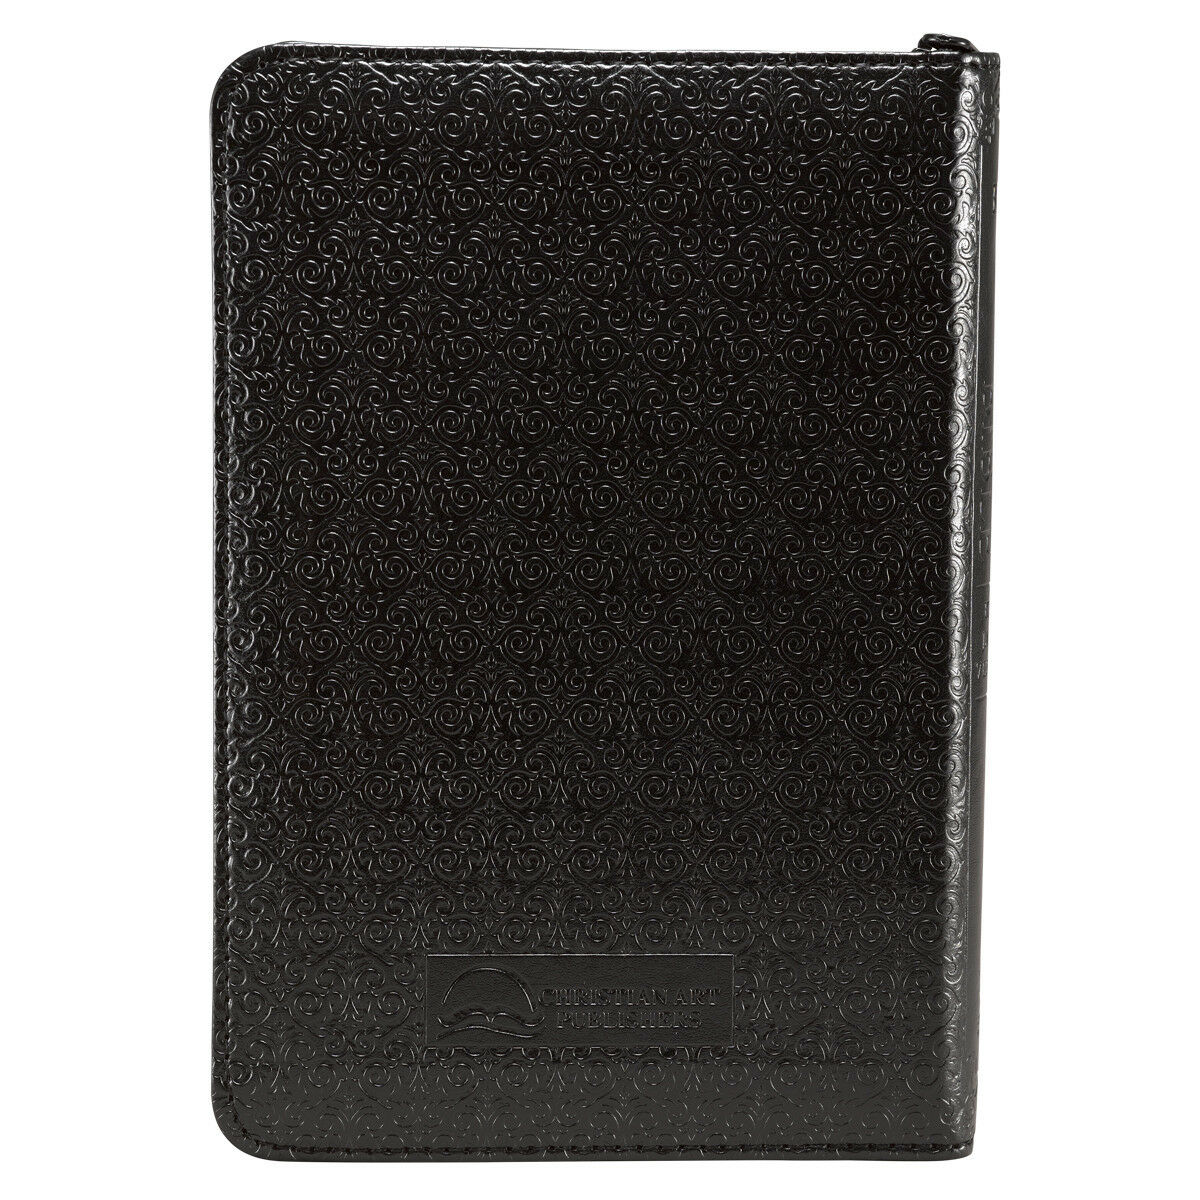 KJV HOLY BIBLE King James Version Black Mini Zippered Pocket Edition